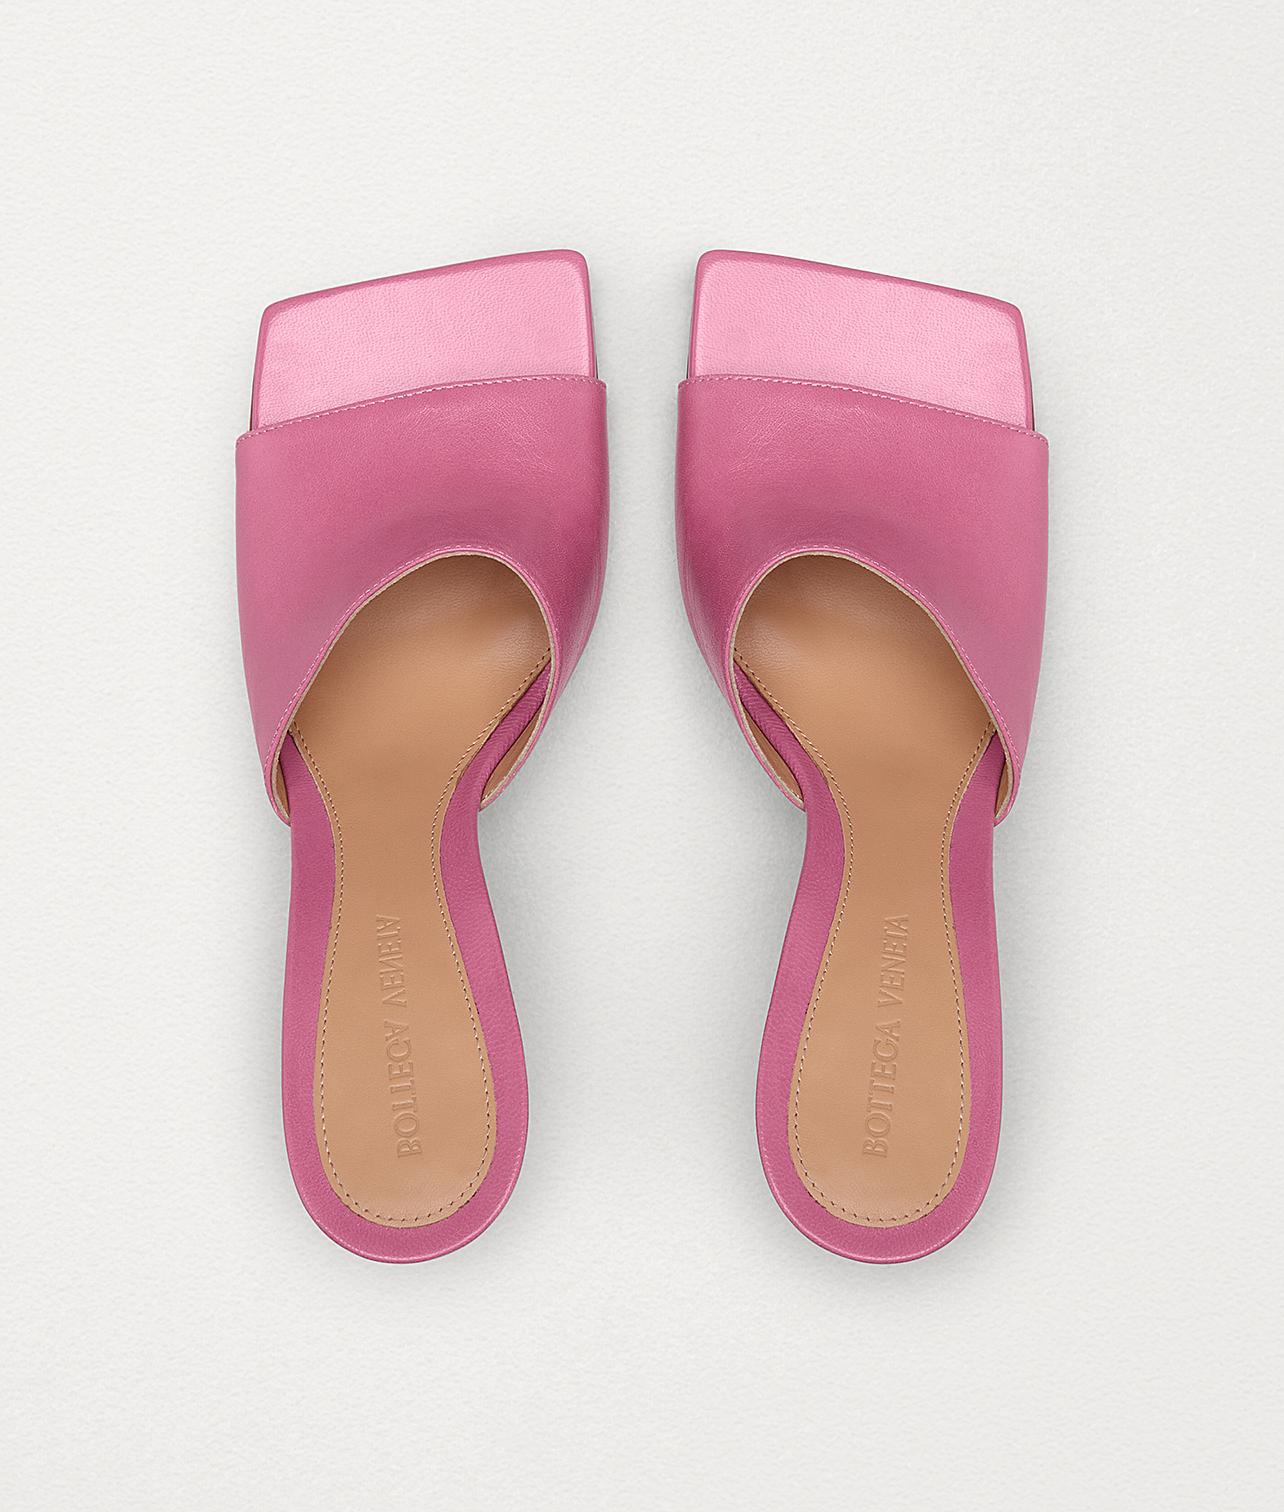 Bottega Veneta Stretch Sandals in Pink - Lyst